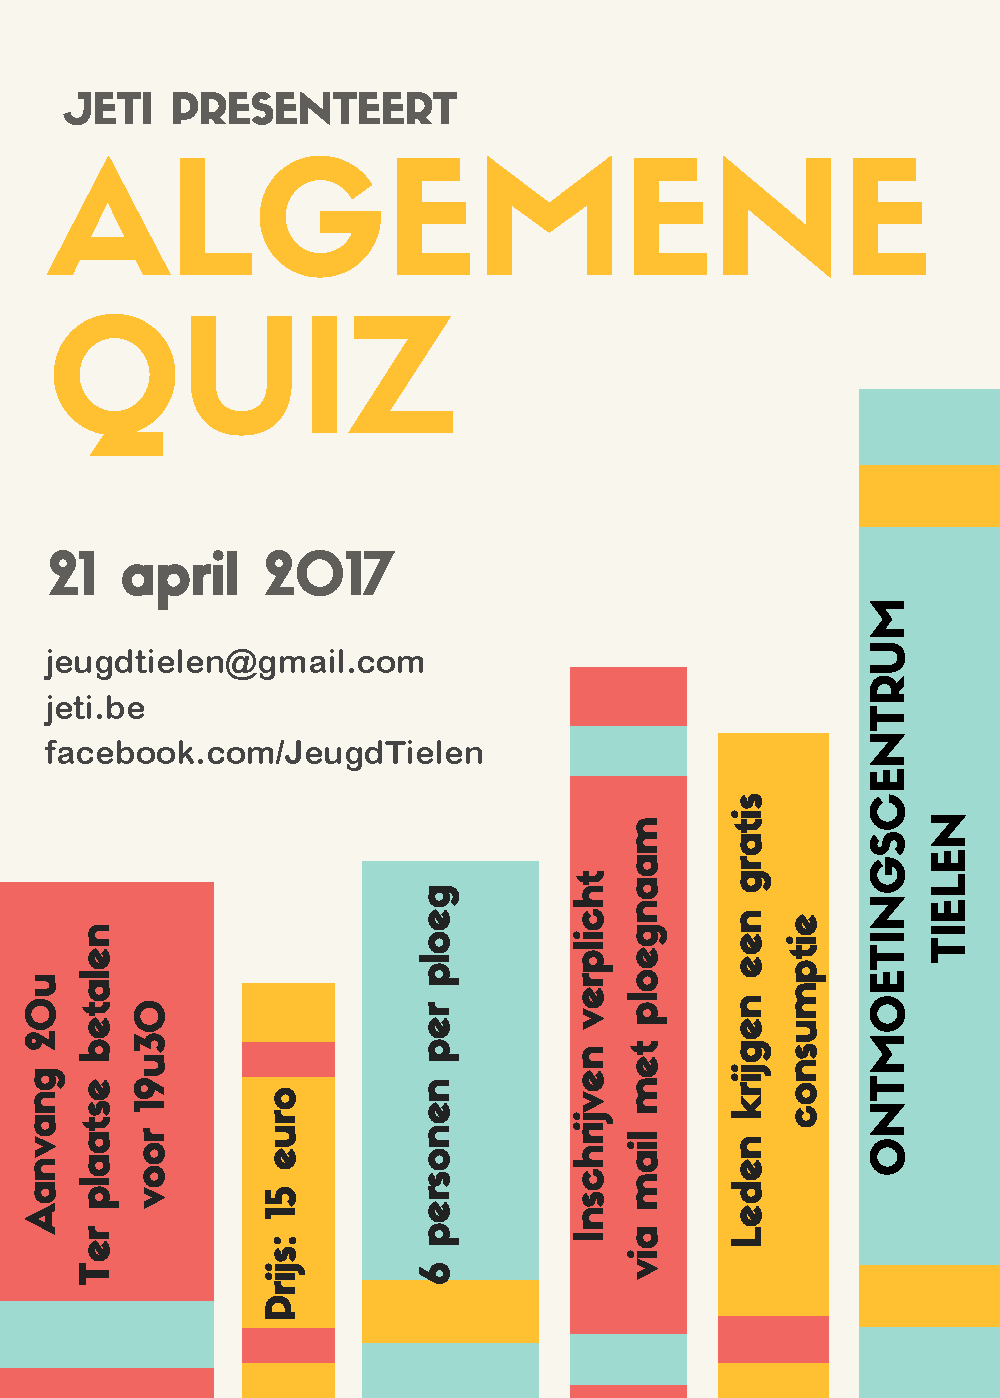 JeTi’s Algemene Quiz 2017